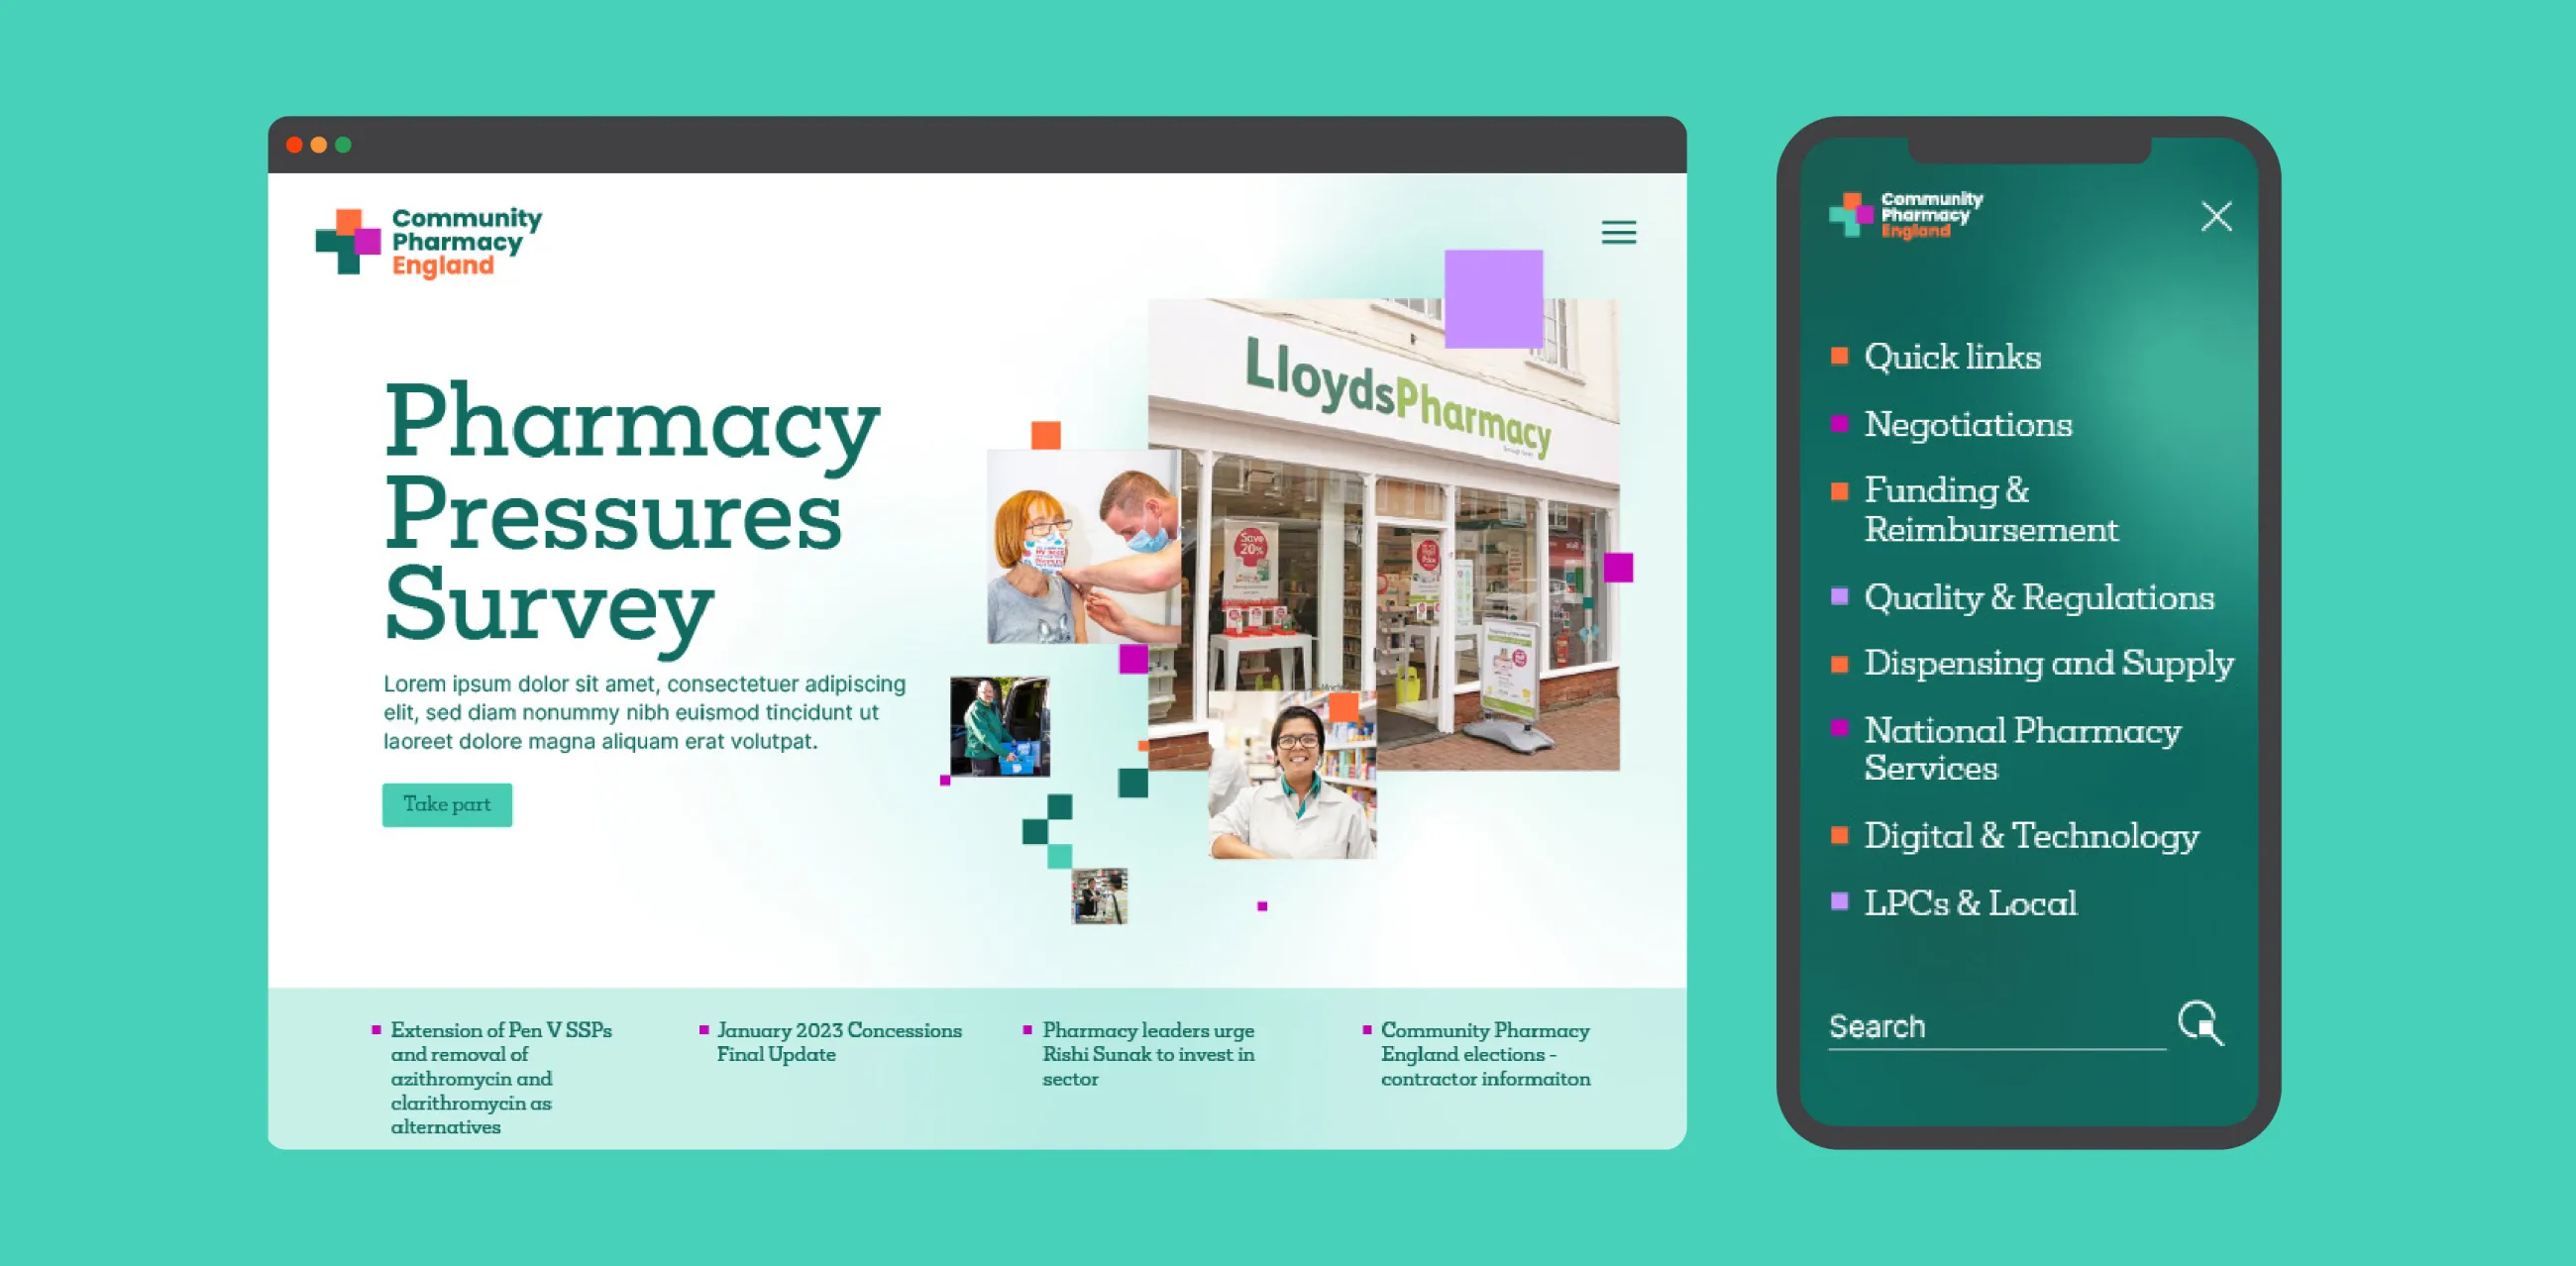 Community Pharmacy England website design on desktop and mobile